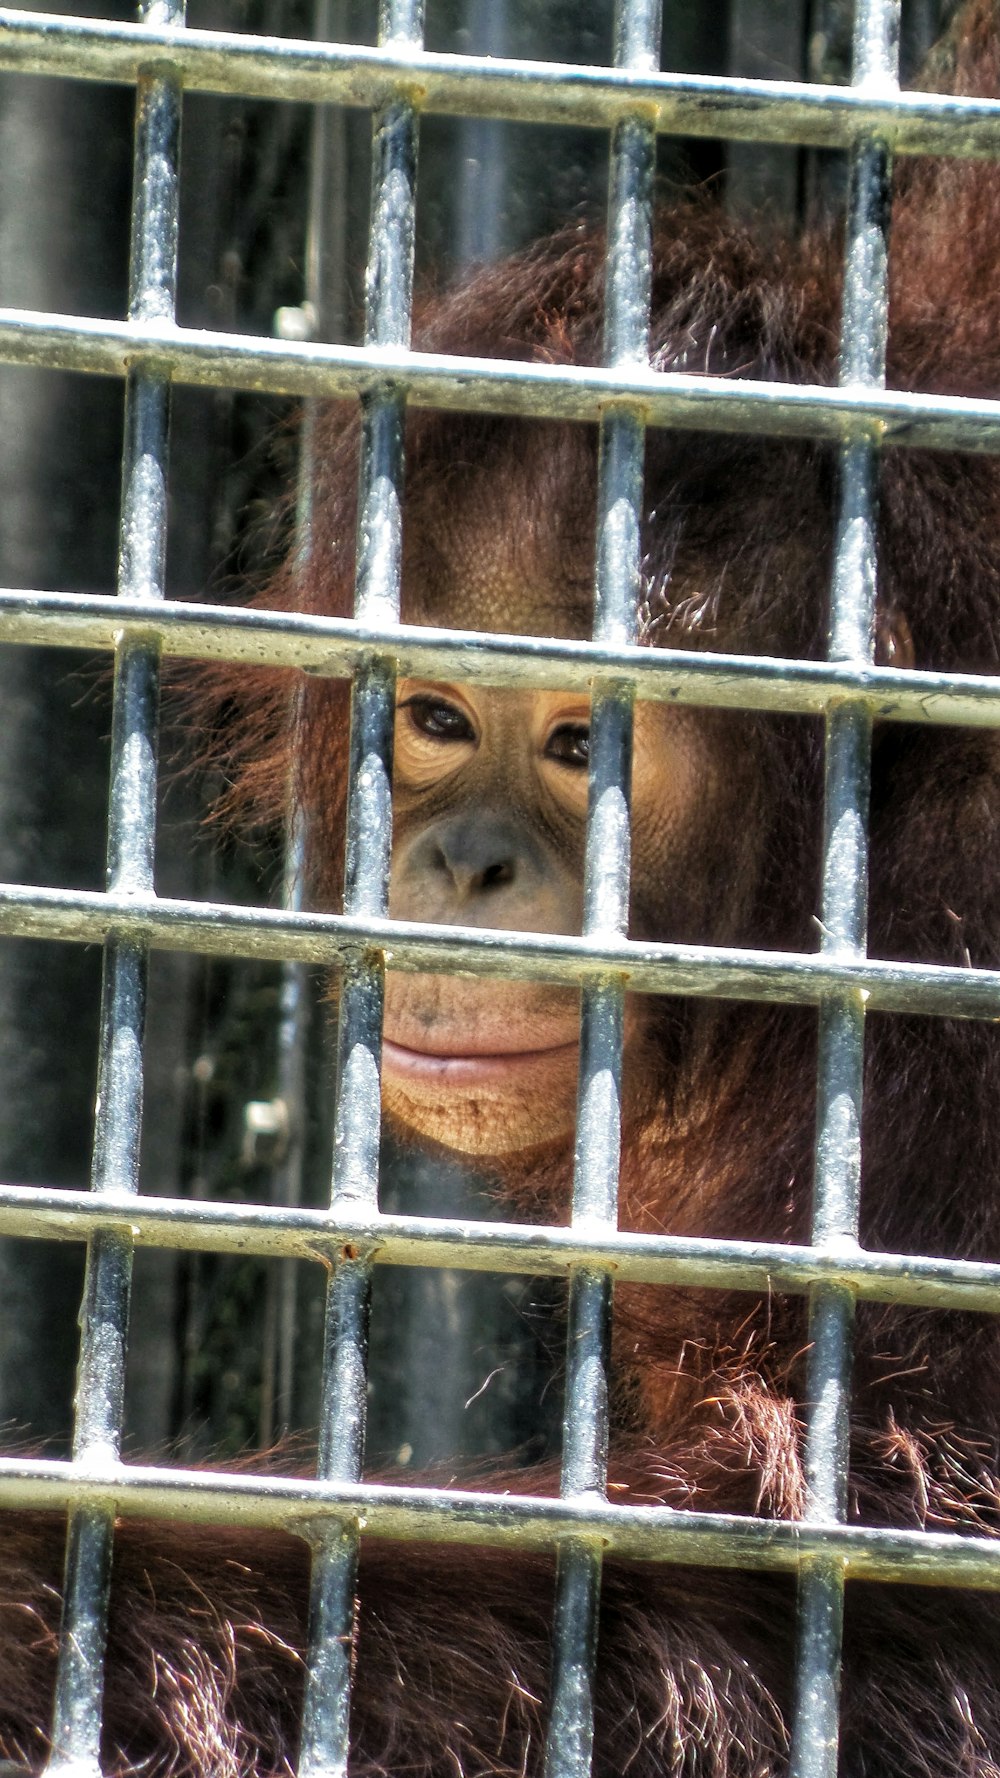 primate in cage